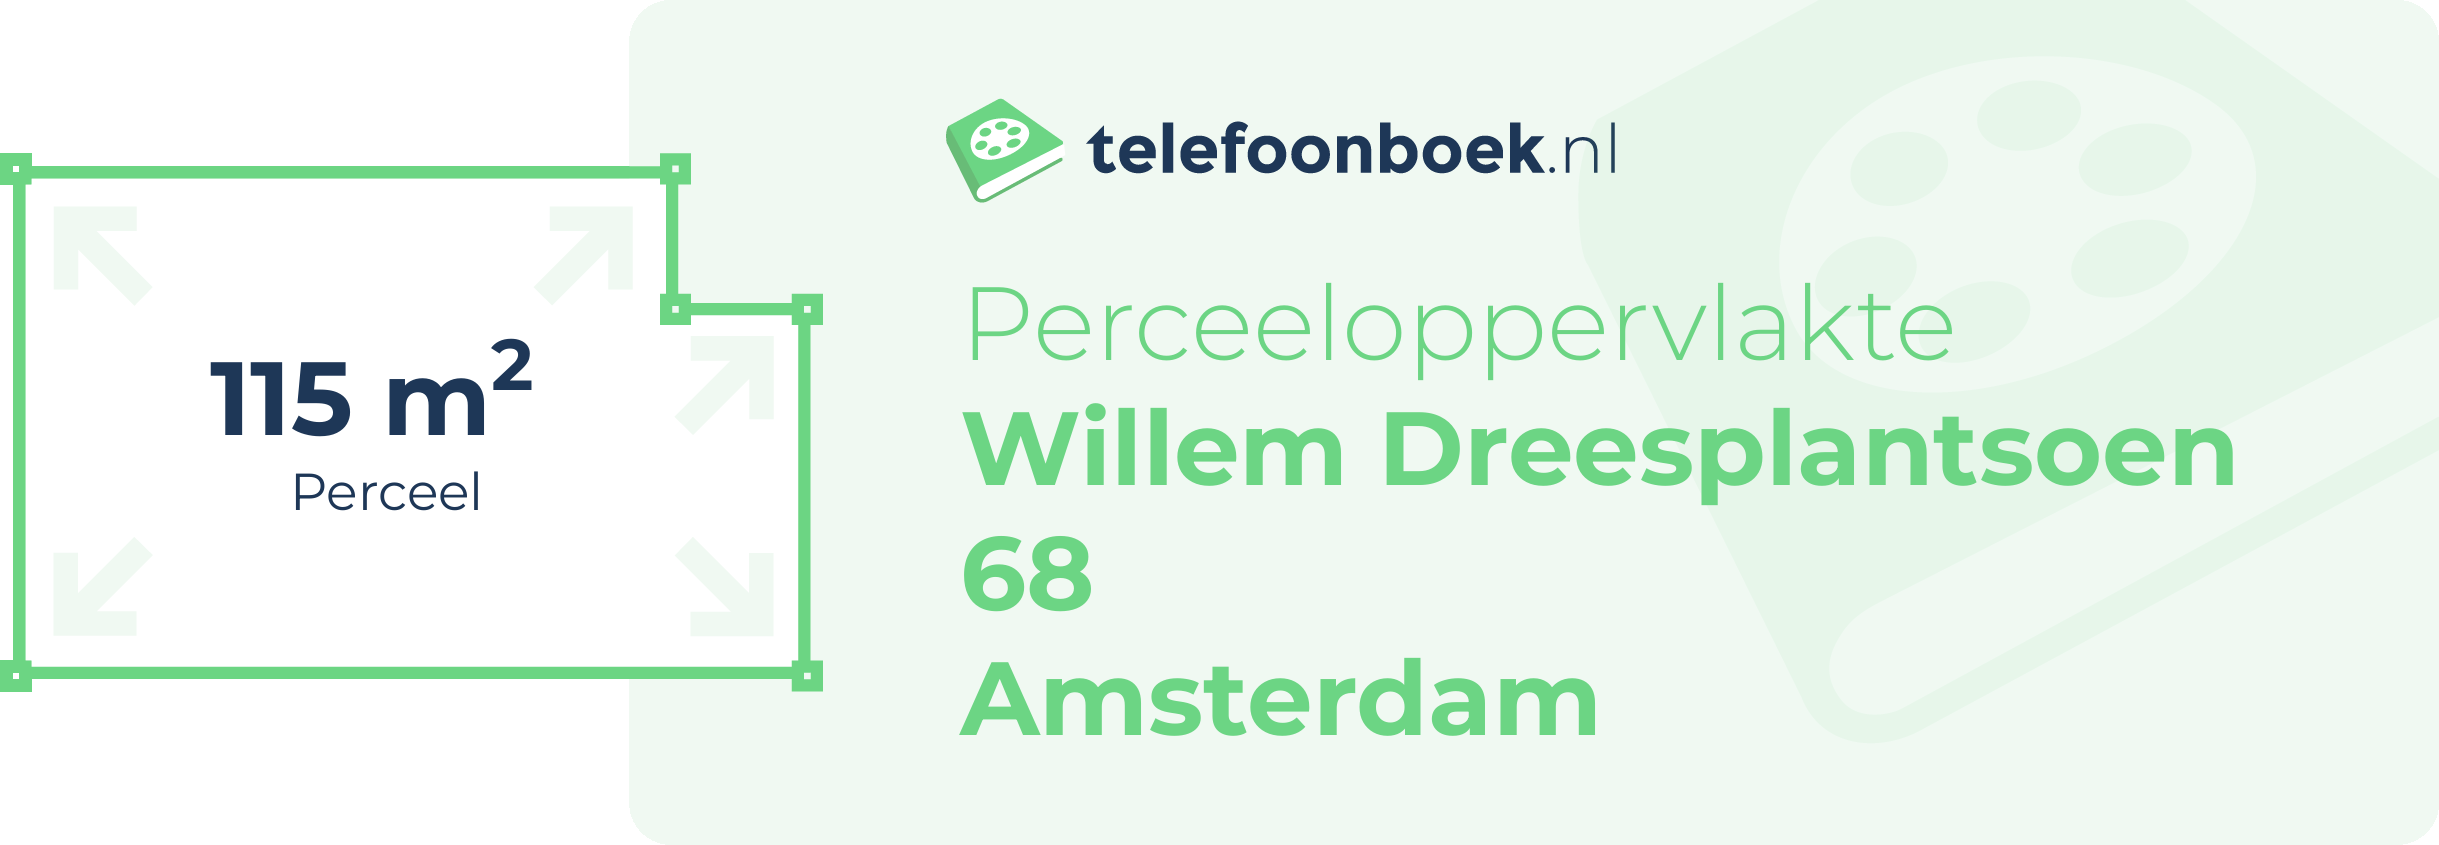 Perceeloppervlakte Willem Dreesplantsoen 68 Amsterdam